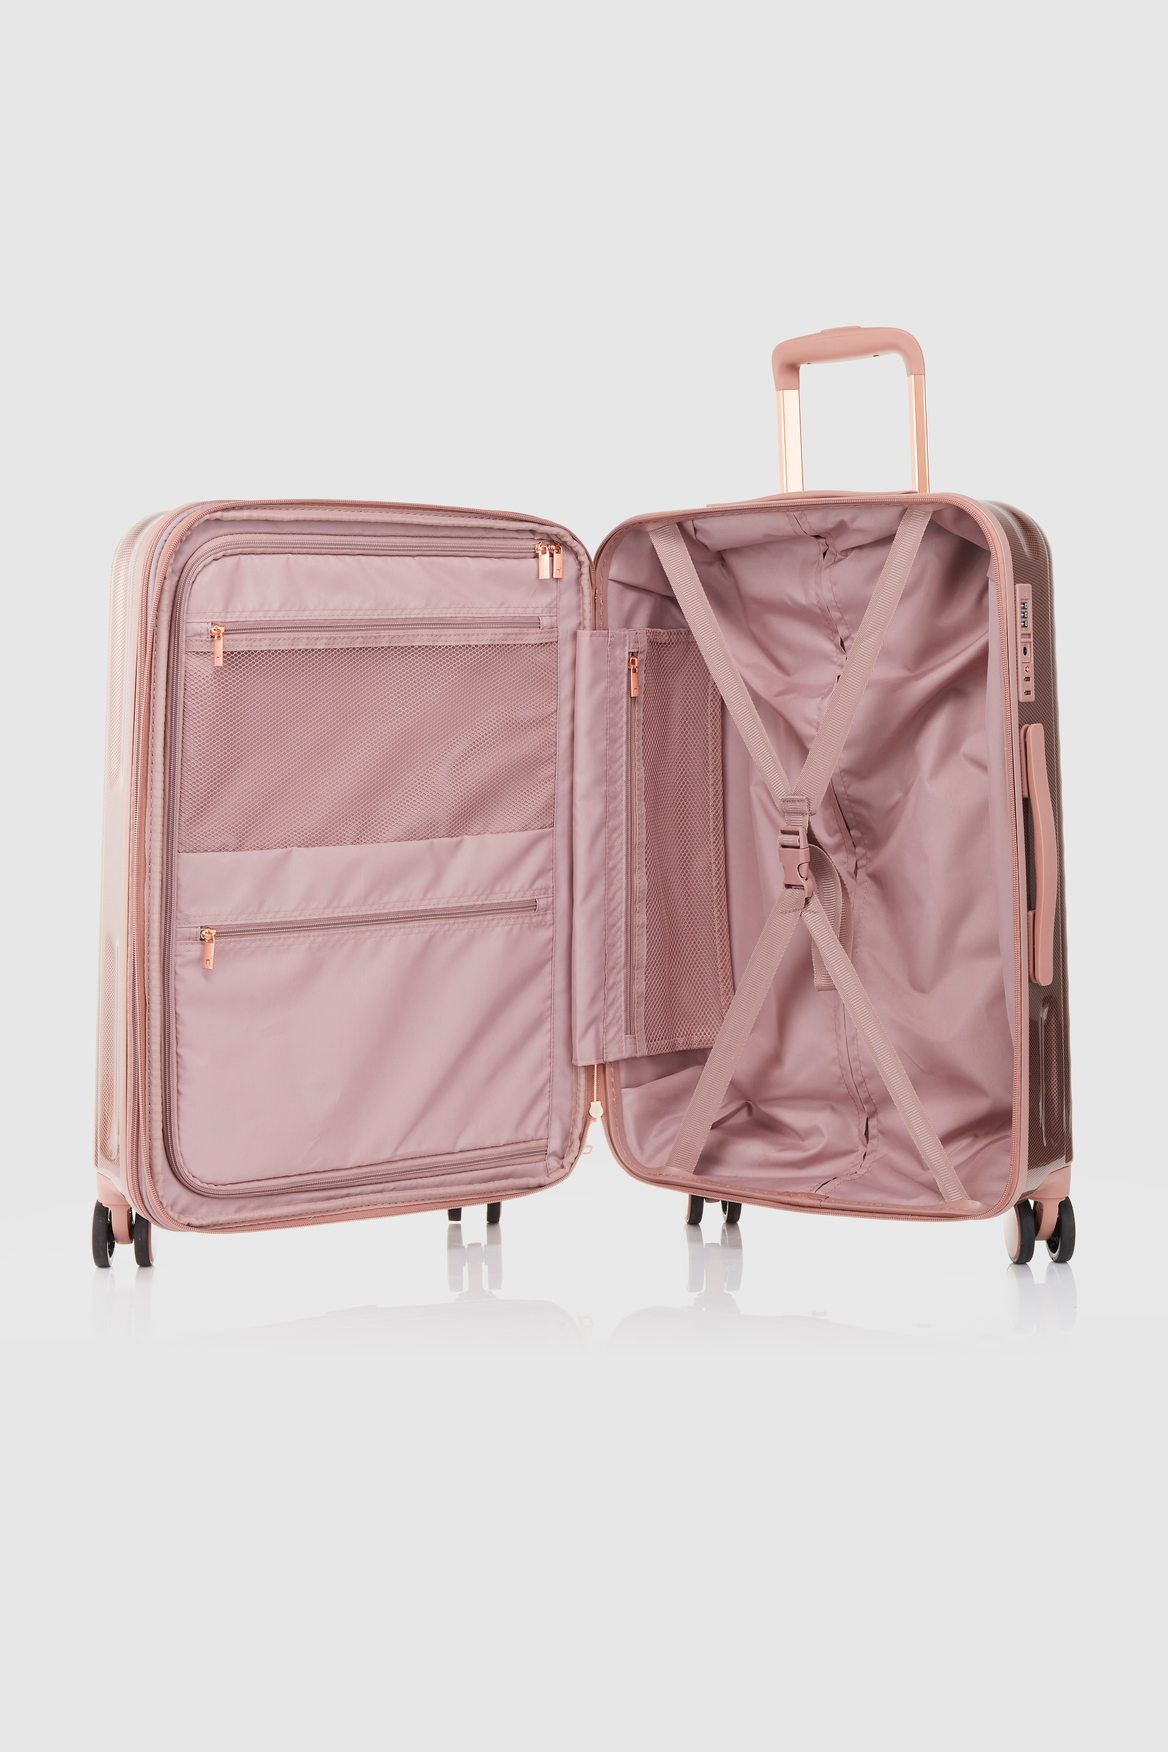 Nere Caype 65cm Suitcase – Strandbags Australia